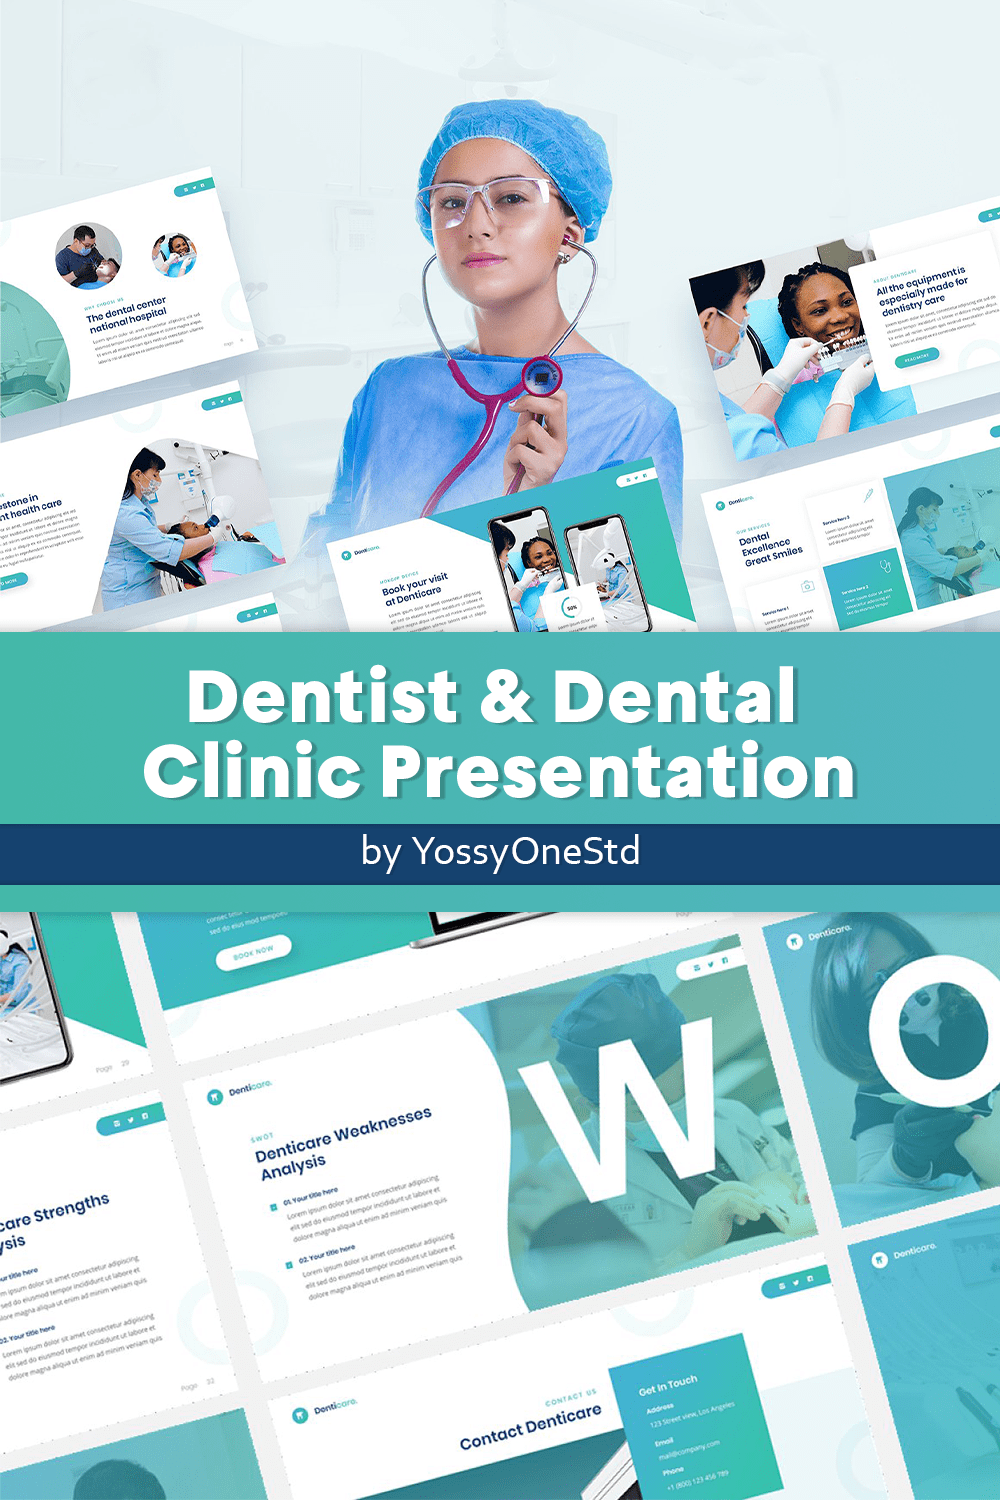 Dentist & Dental Clinic Presentation pinterest image.